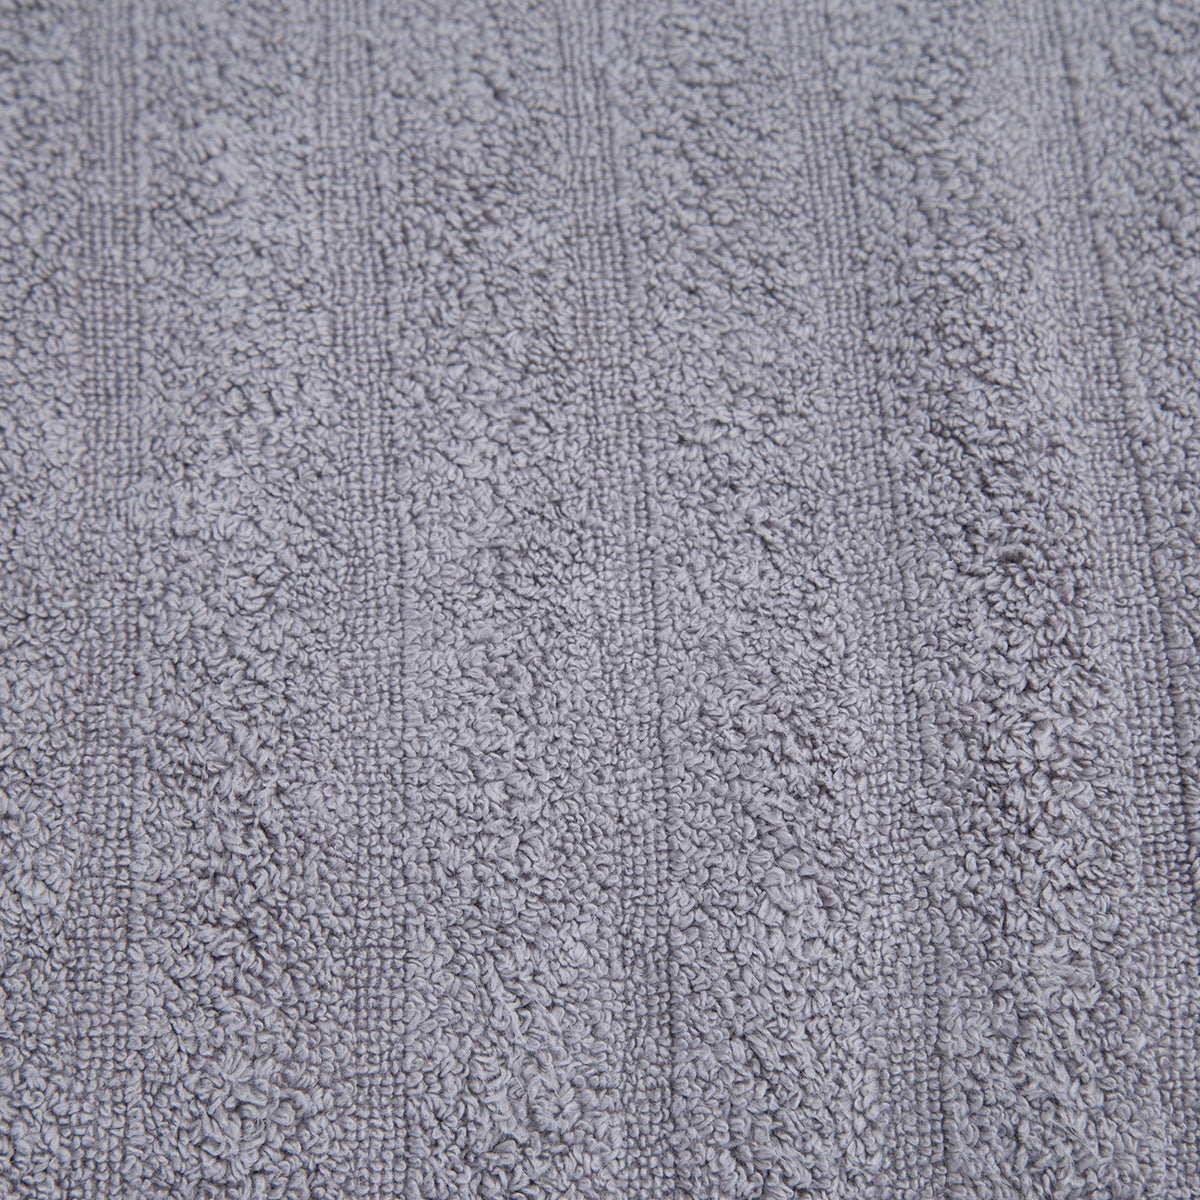 Casper Antimicrobial Antifungal Super Absorbent Lofty Frost Grey Towel